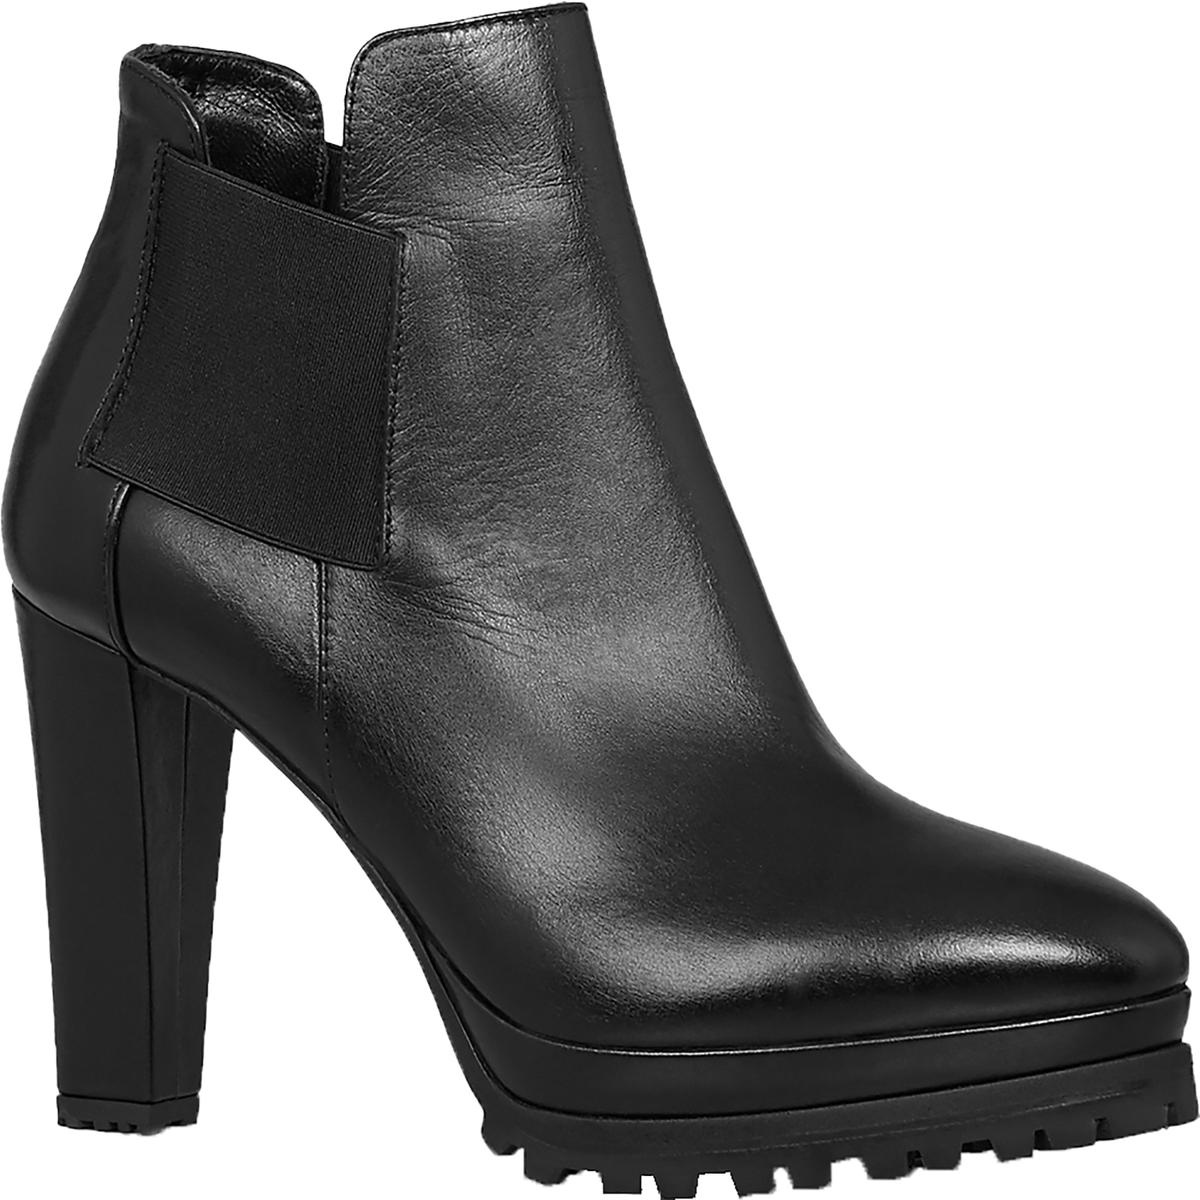 All Saints Womens Sarris Black Chelsea Boots Shoes 41 Medium (B,M) BHFO ...